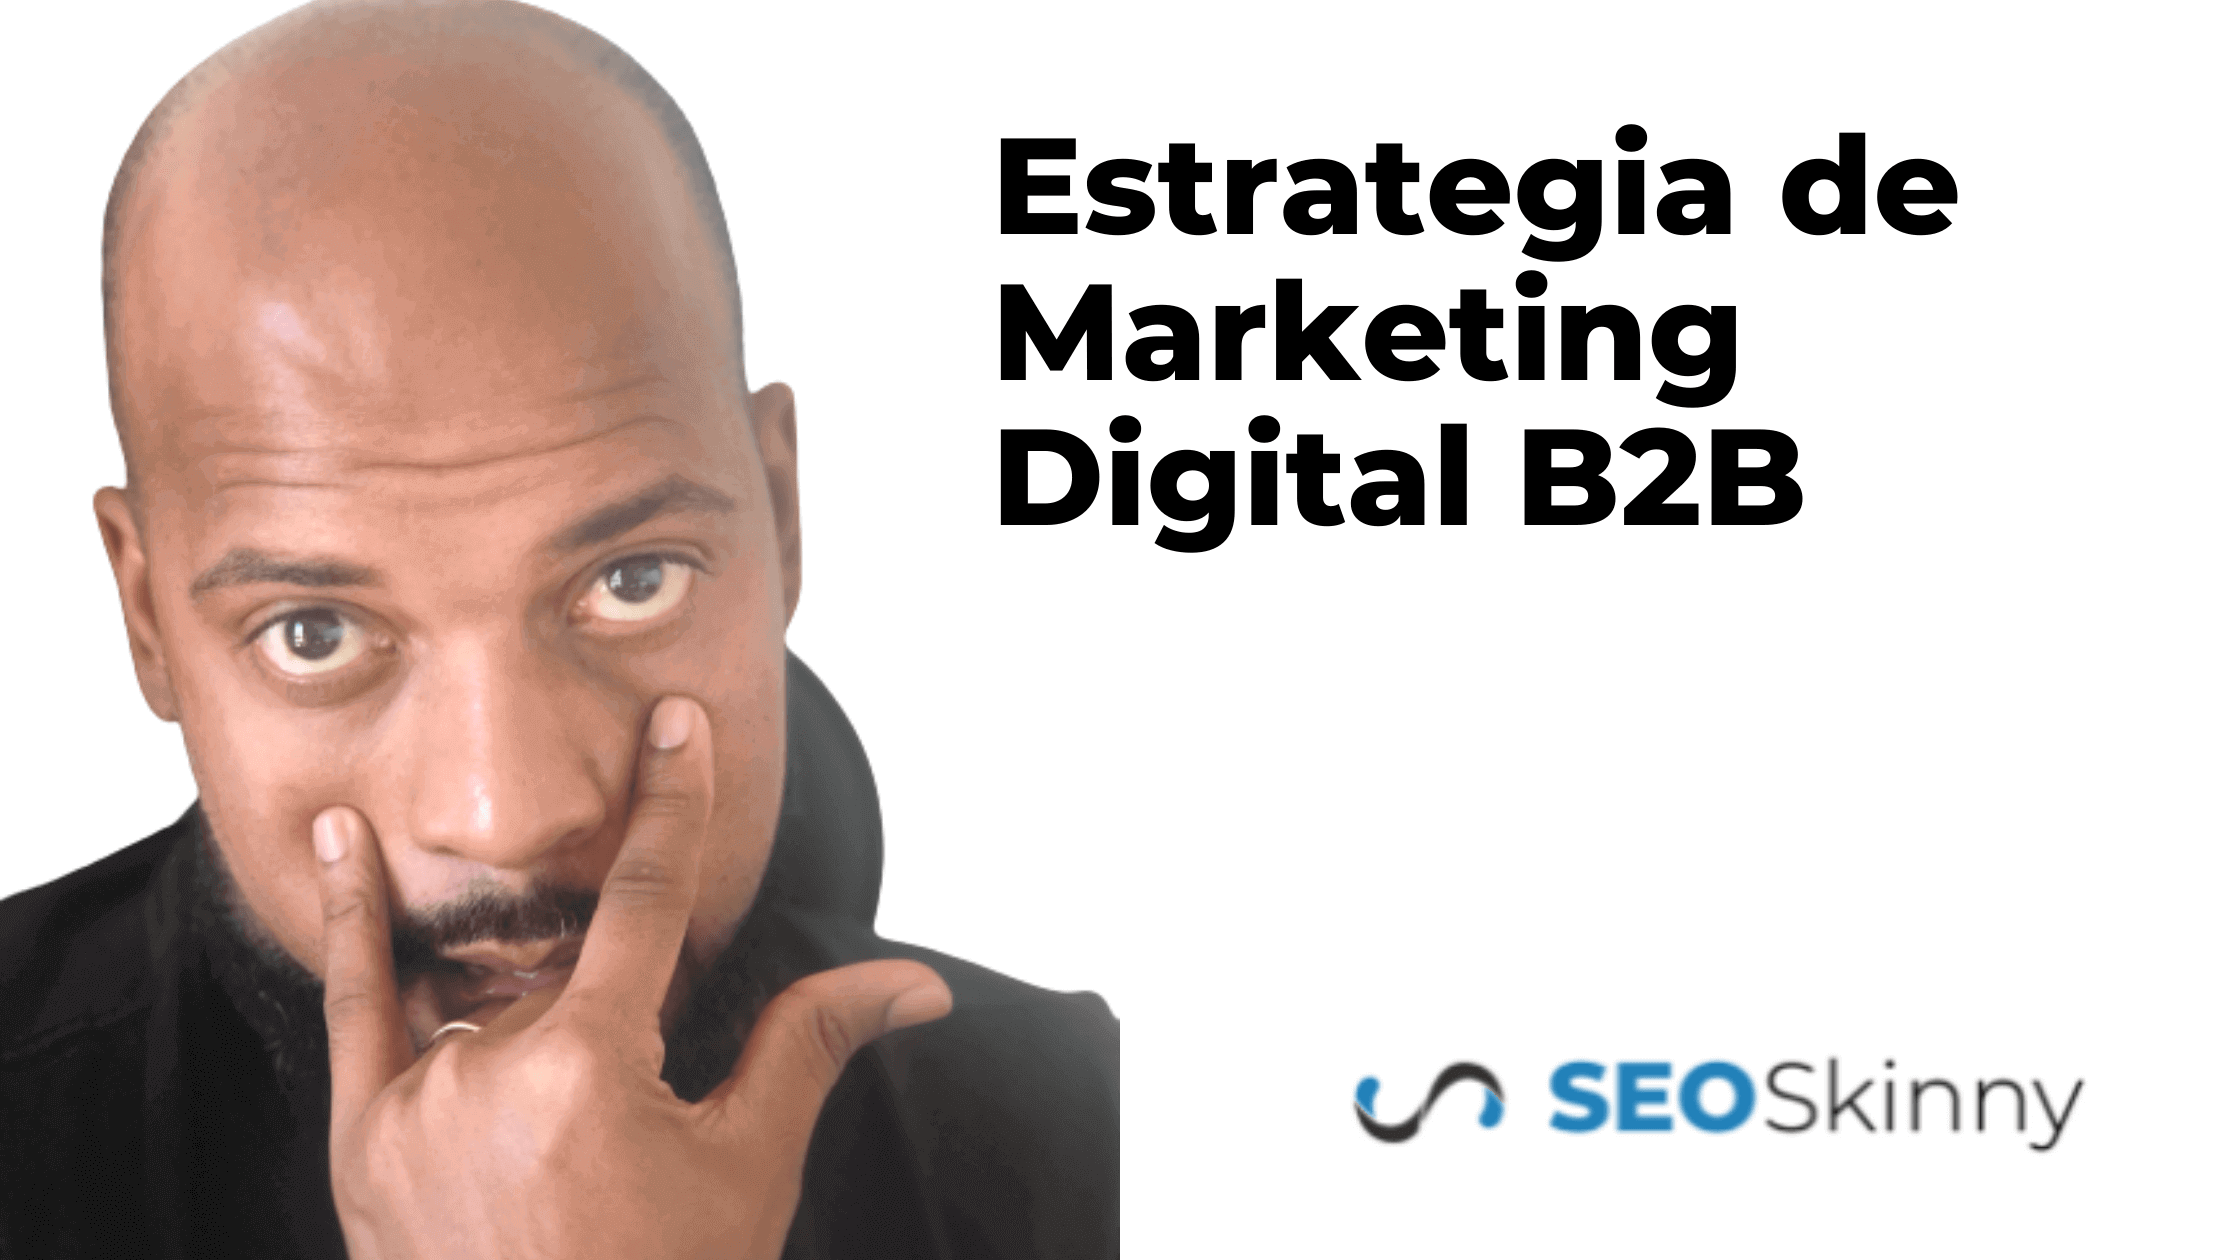 Estrategias de marketing digital B2B